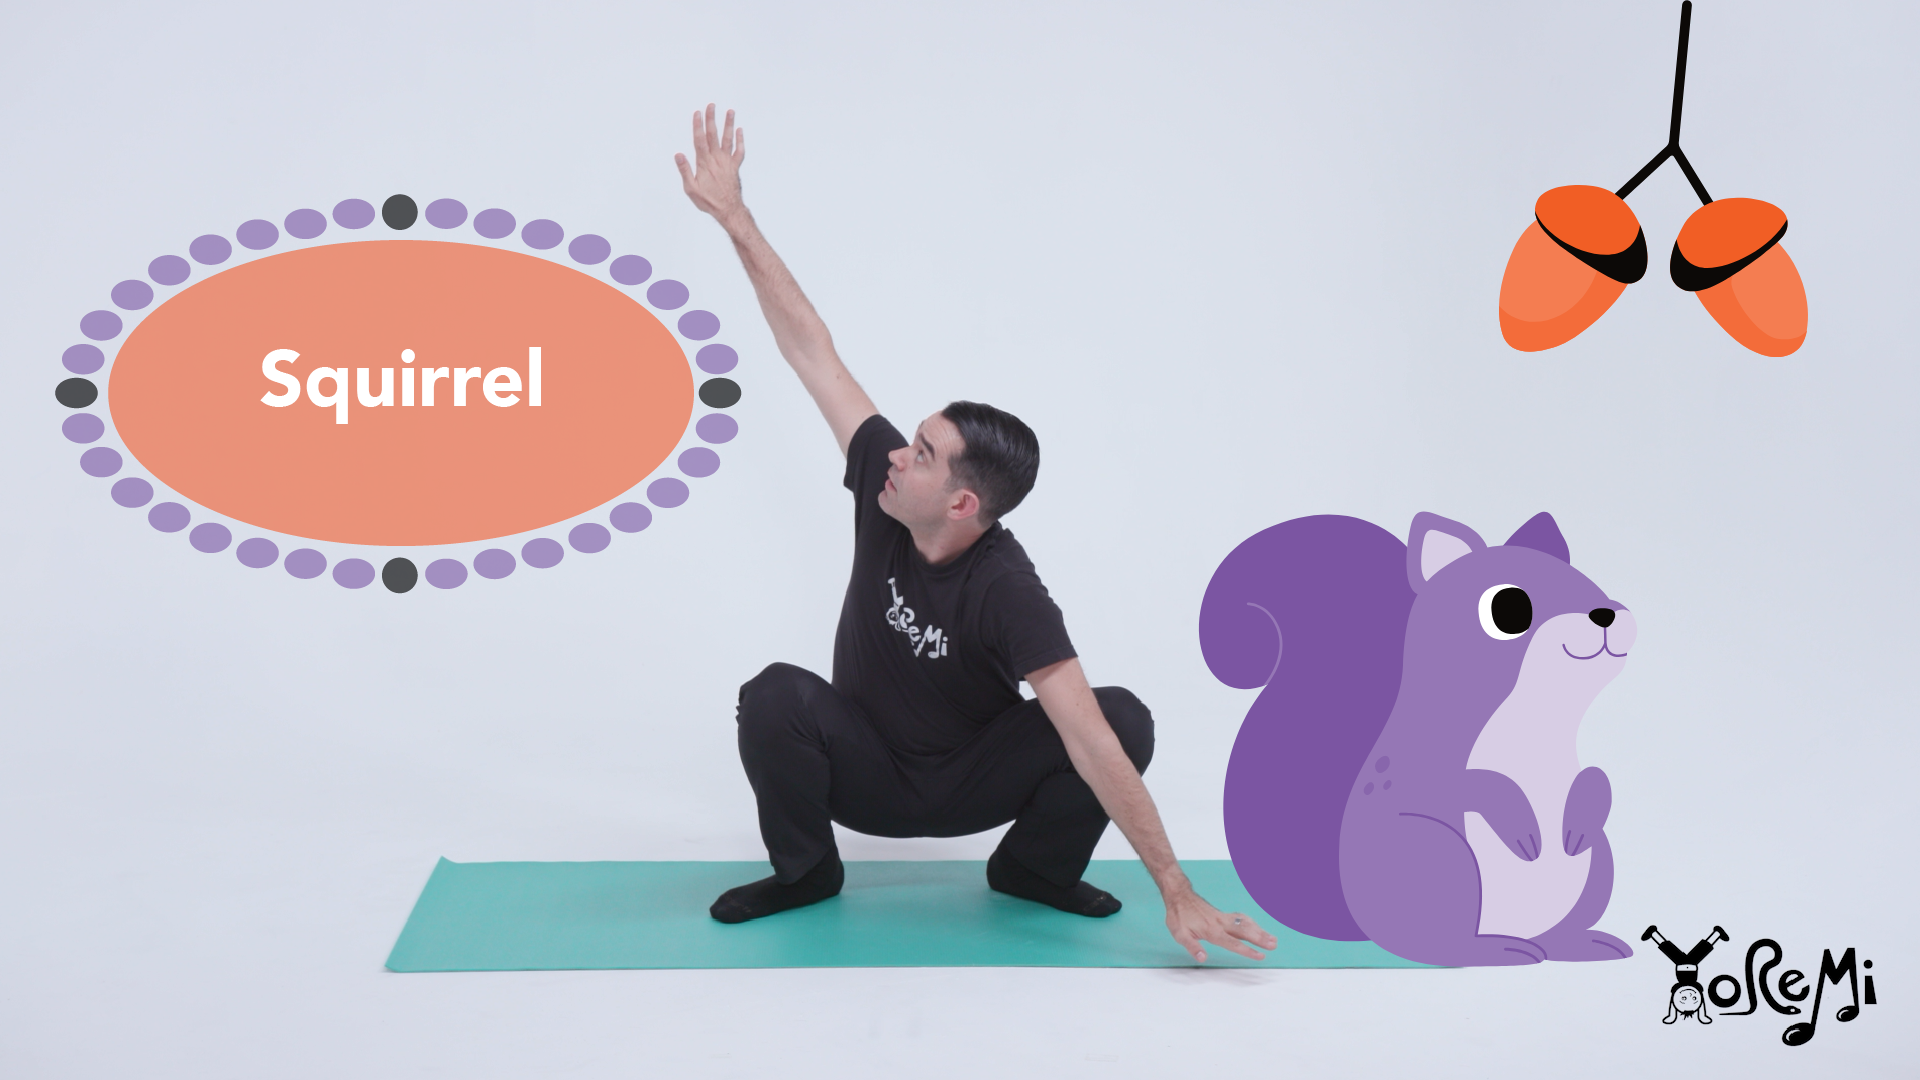 3 Yin Yoga poses to help boost immunity